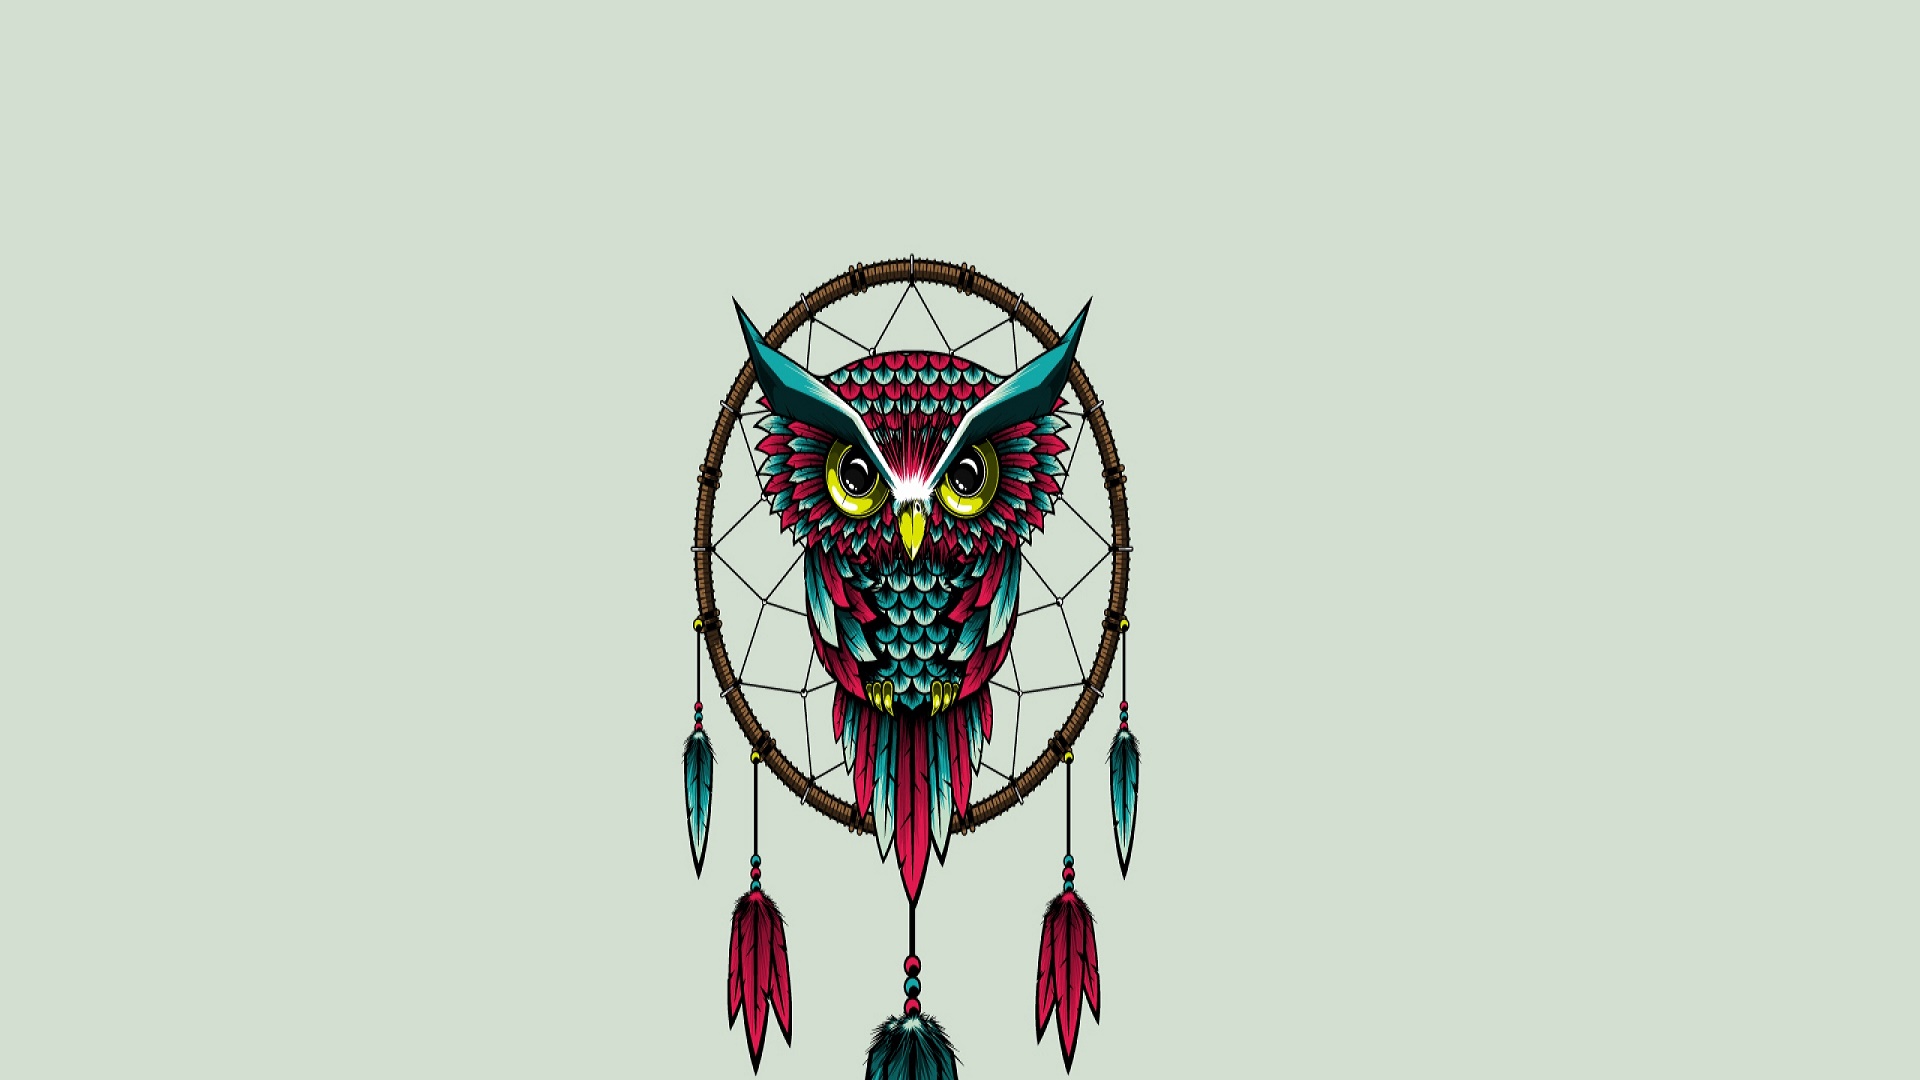 wallpaper keren hd,illustration,owl,graphic design,art,wing